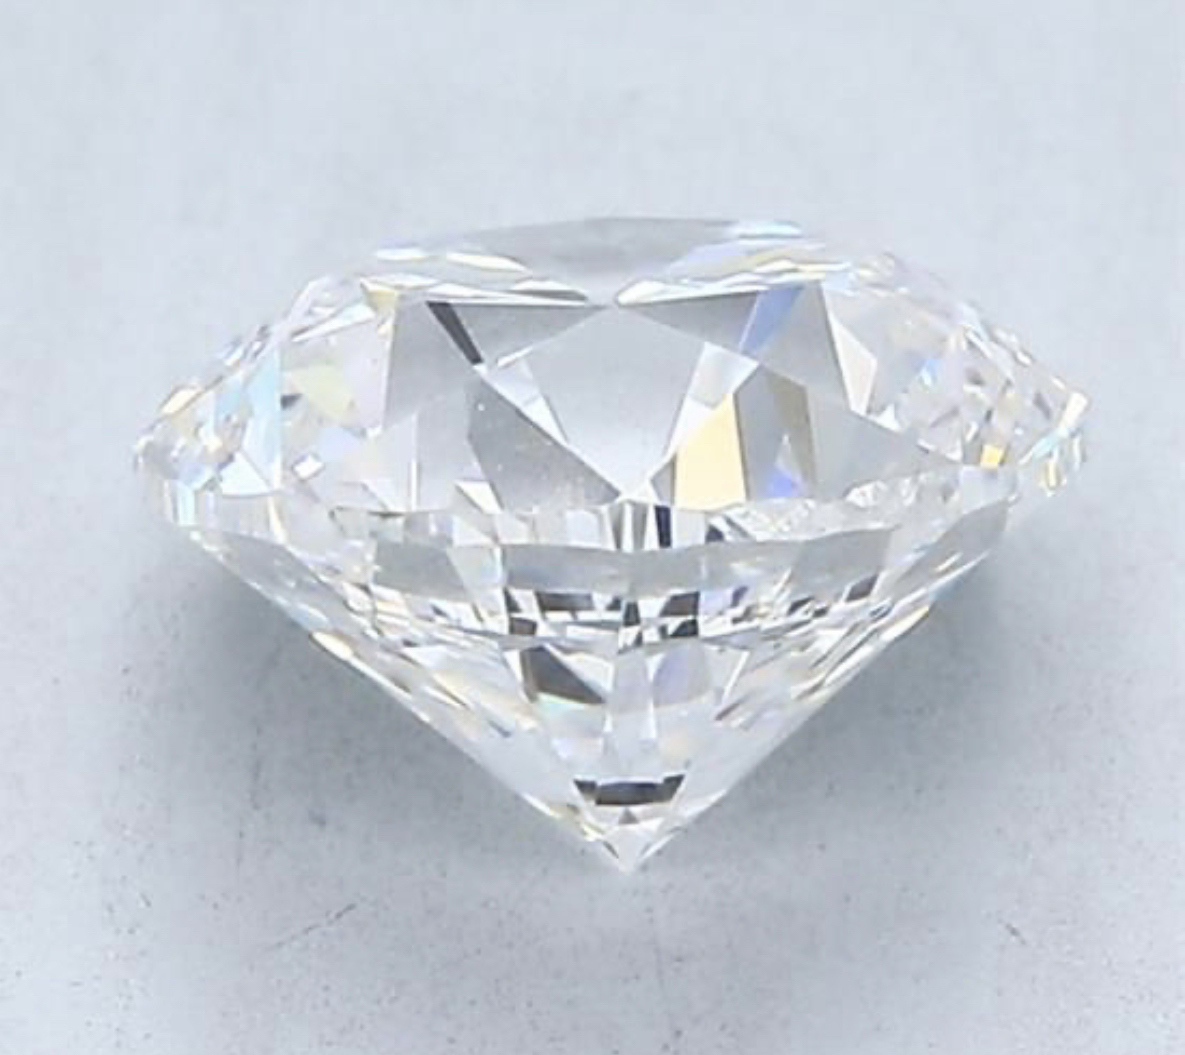 Round Brilliant Cut Natural Diamond 2.01 Carat Colour D Clarity VS1 - DGI 142589574 - Image 3 of 7